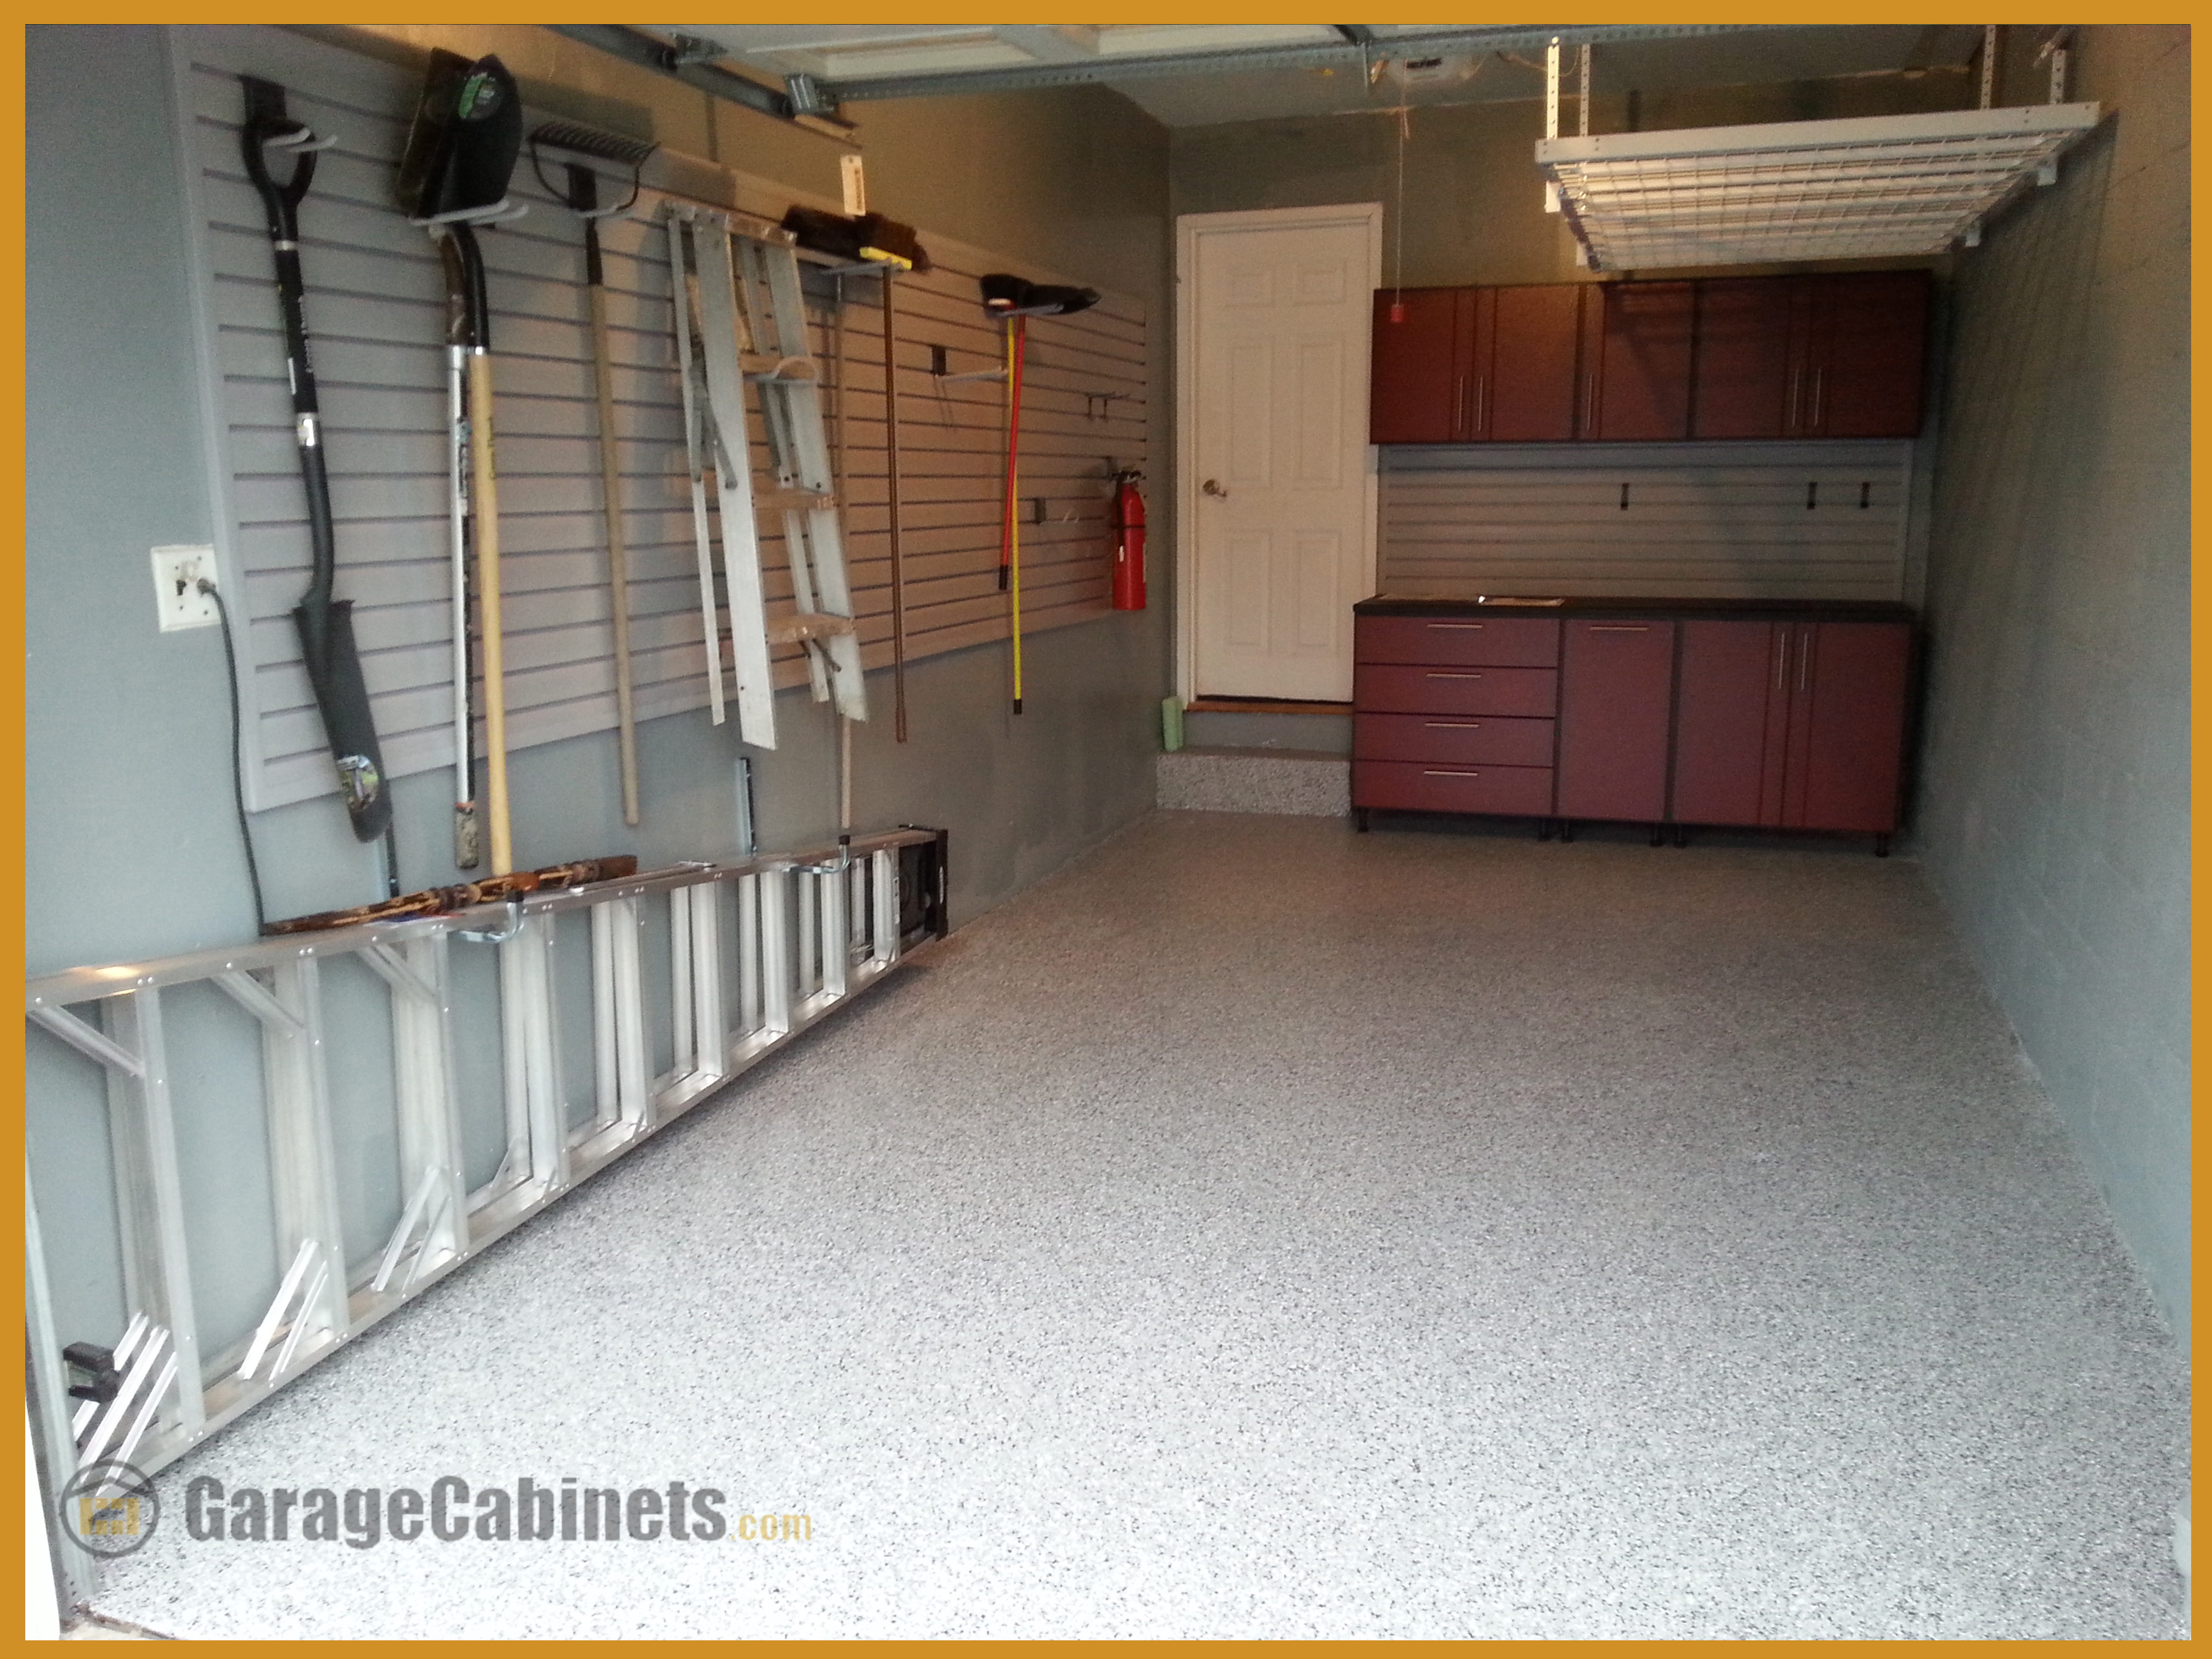 WorkSpace Garage Cabinets In Your Average 1 Car Massachusetts Garage